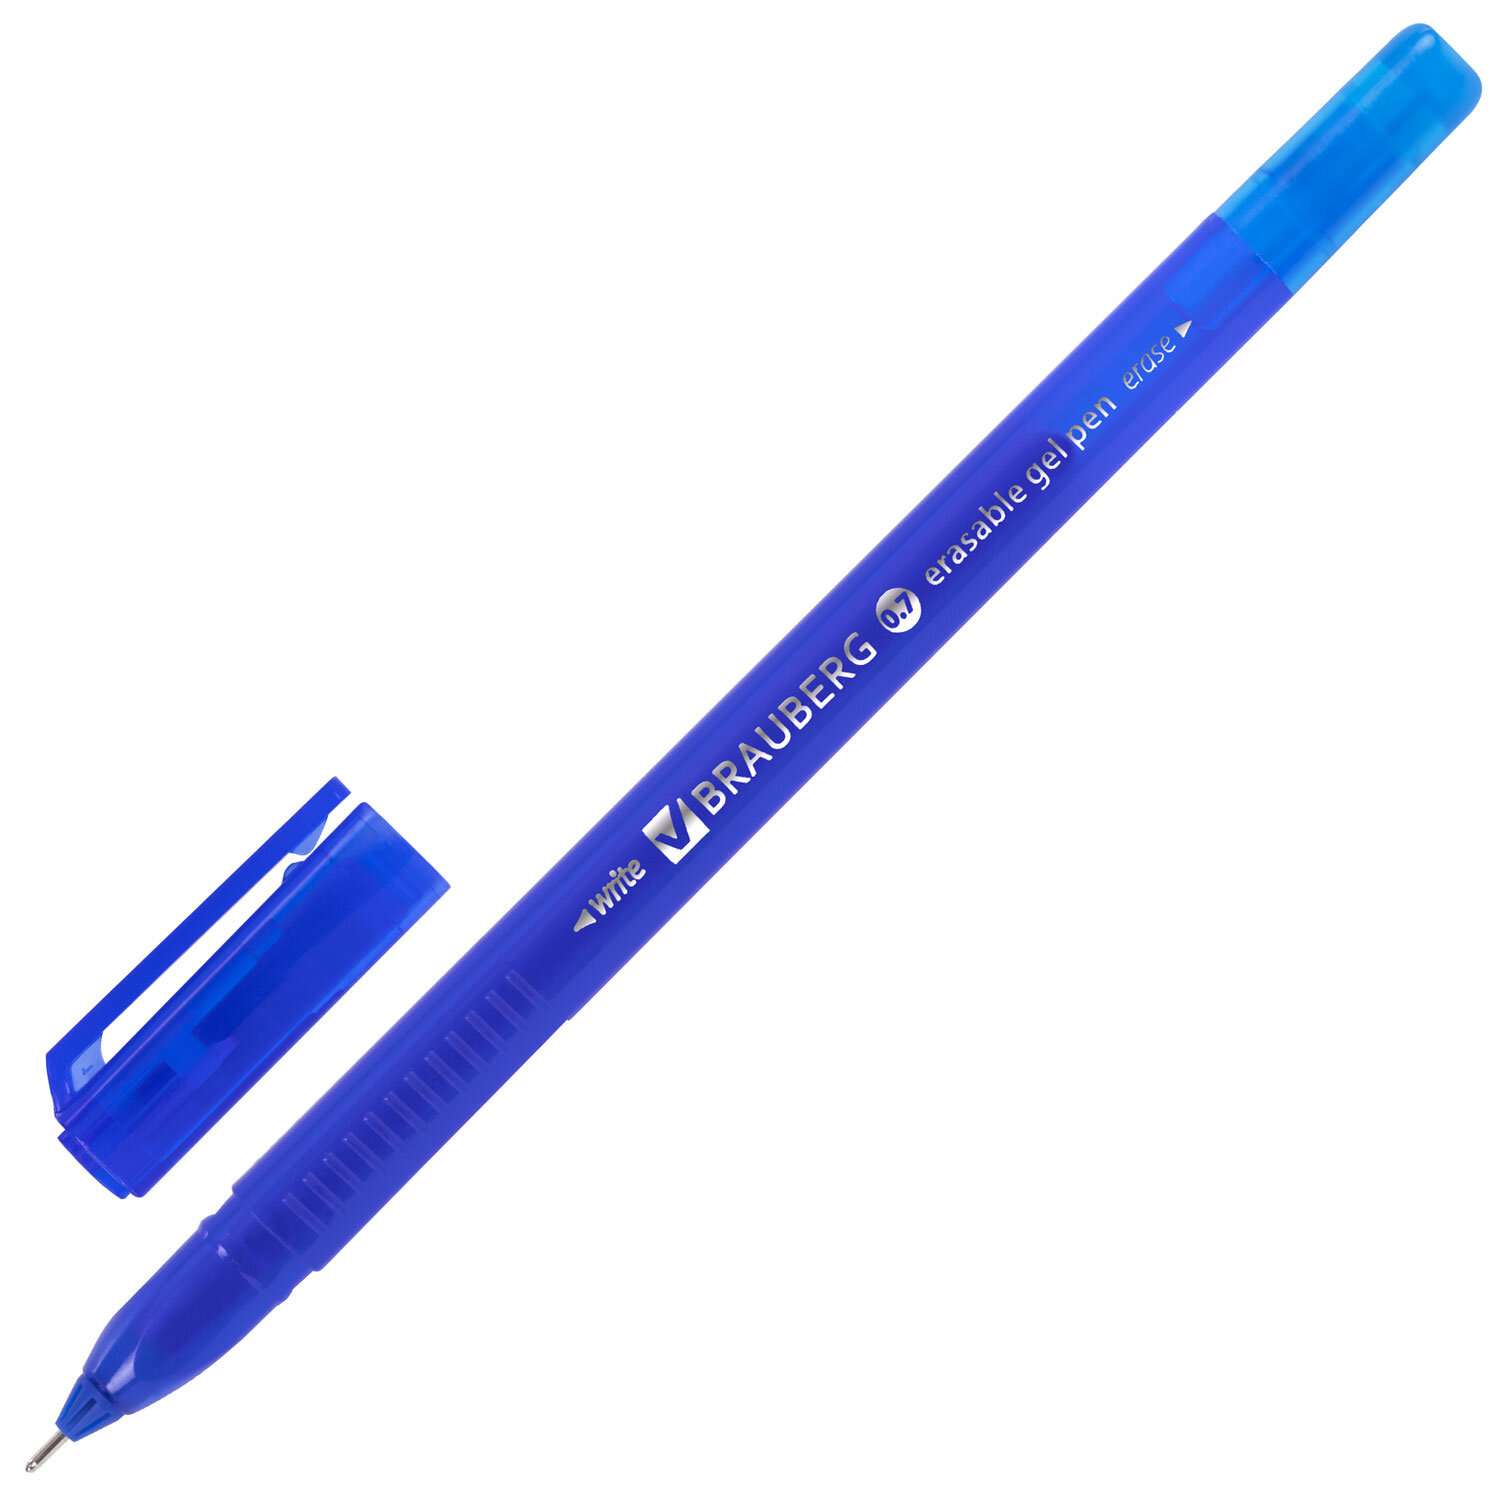 Ручки гелевые Brauberg пиши стирай набор 4 штуки синие - фото 4